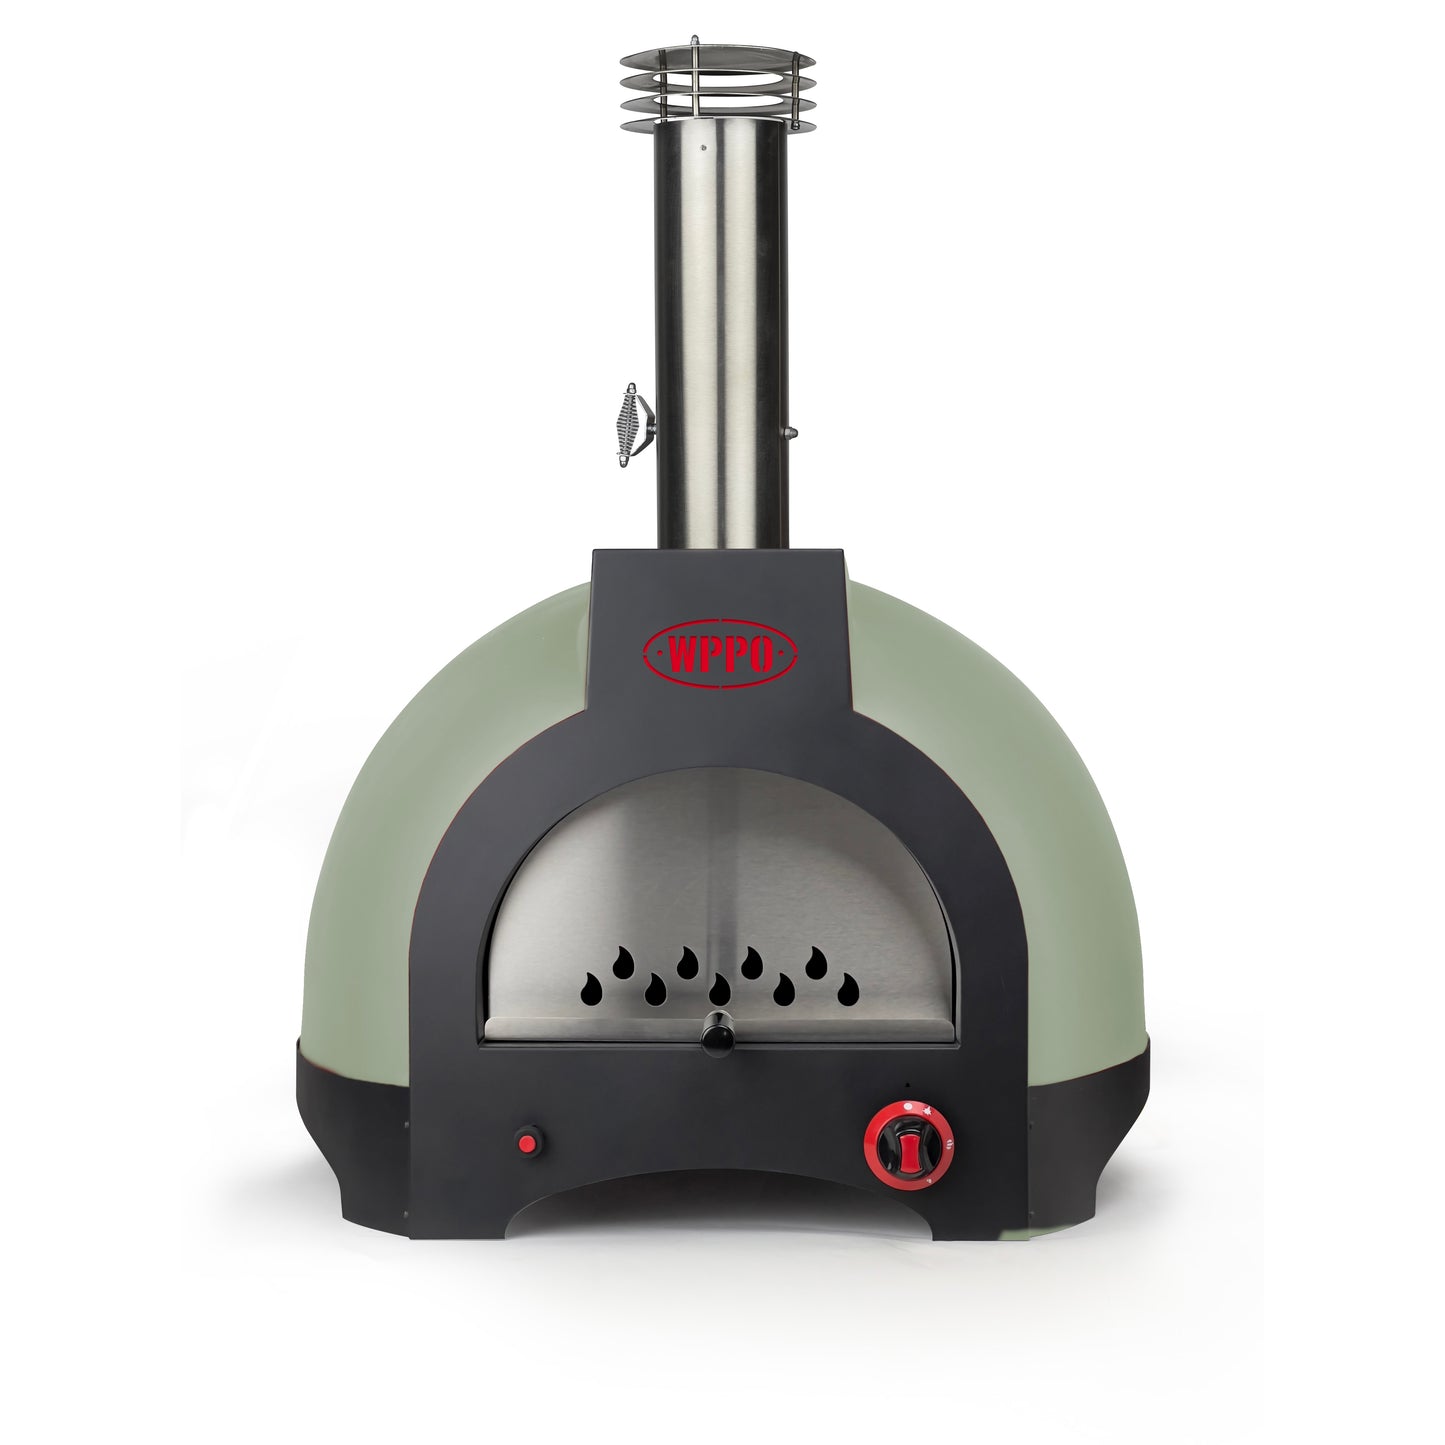 
                  
                    WPPO - Infinity 66 Wood / Gas  Hybrid - 3 Pizza Oven. - WPPO LLC Direct
                  
                